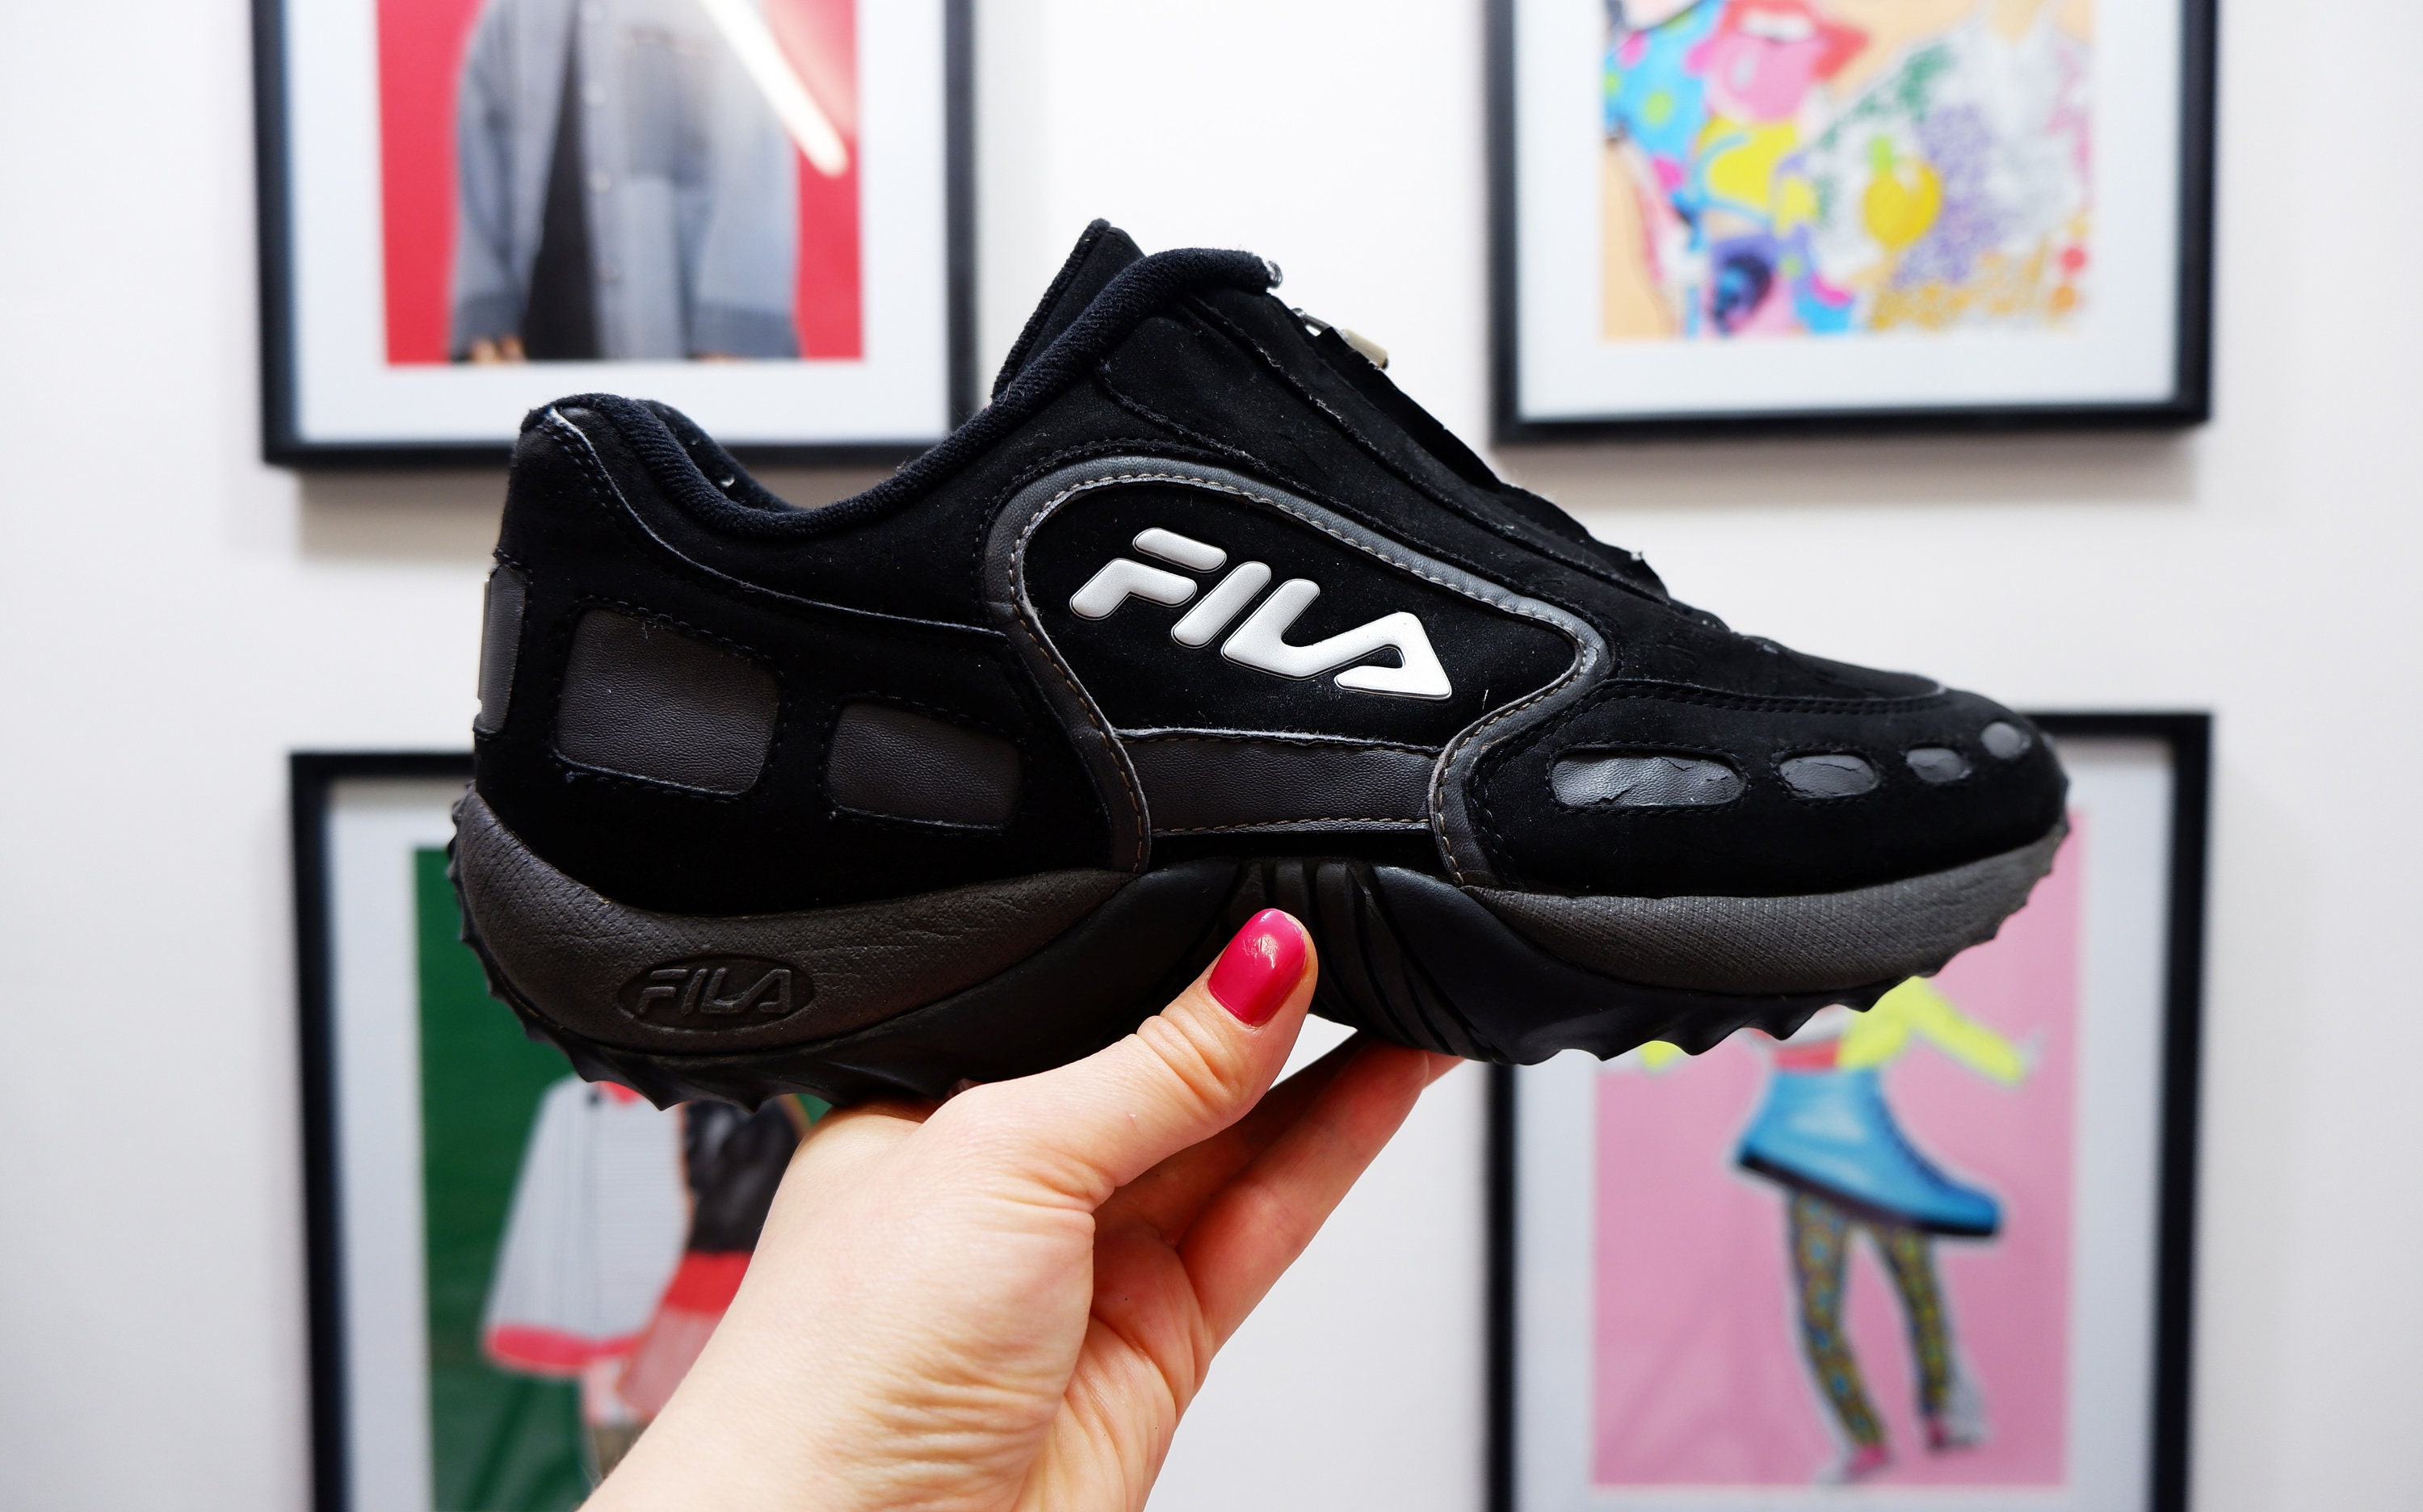 VTG 90s FILA Chunky Sneakers Dad Shoes 1990s Street Wear Womens 6 US